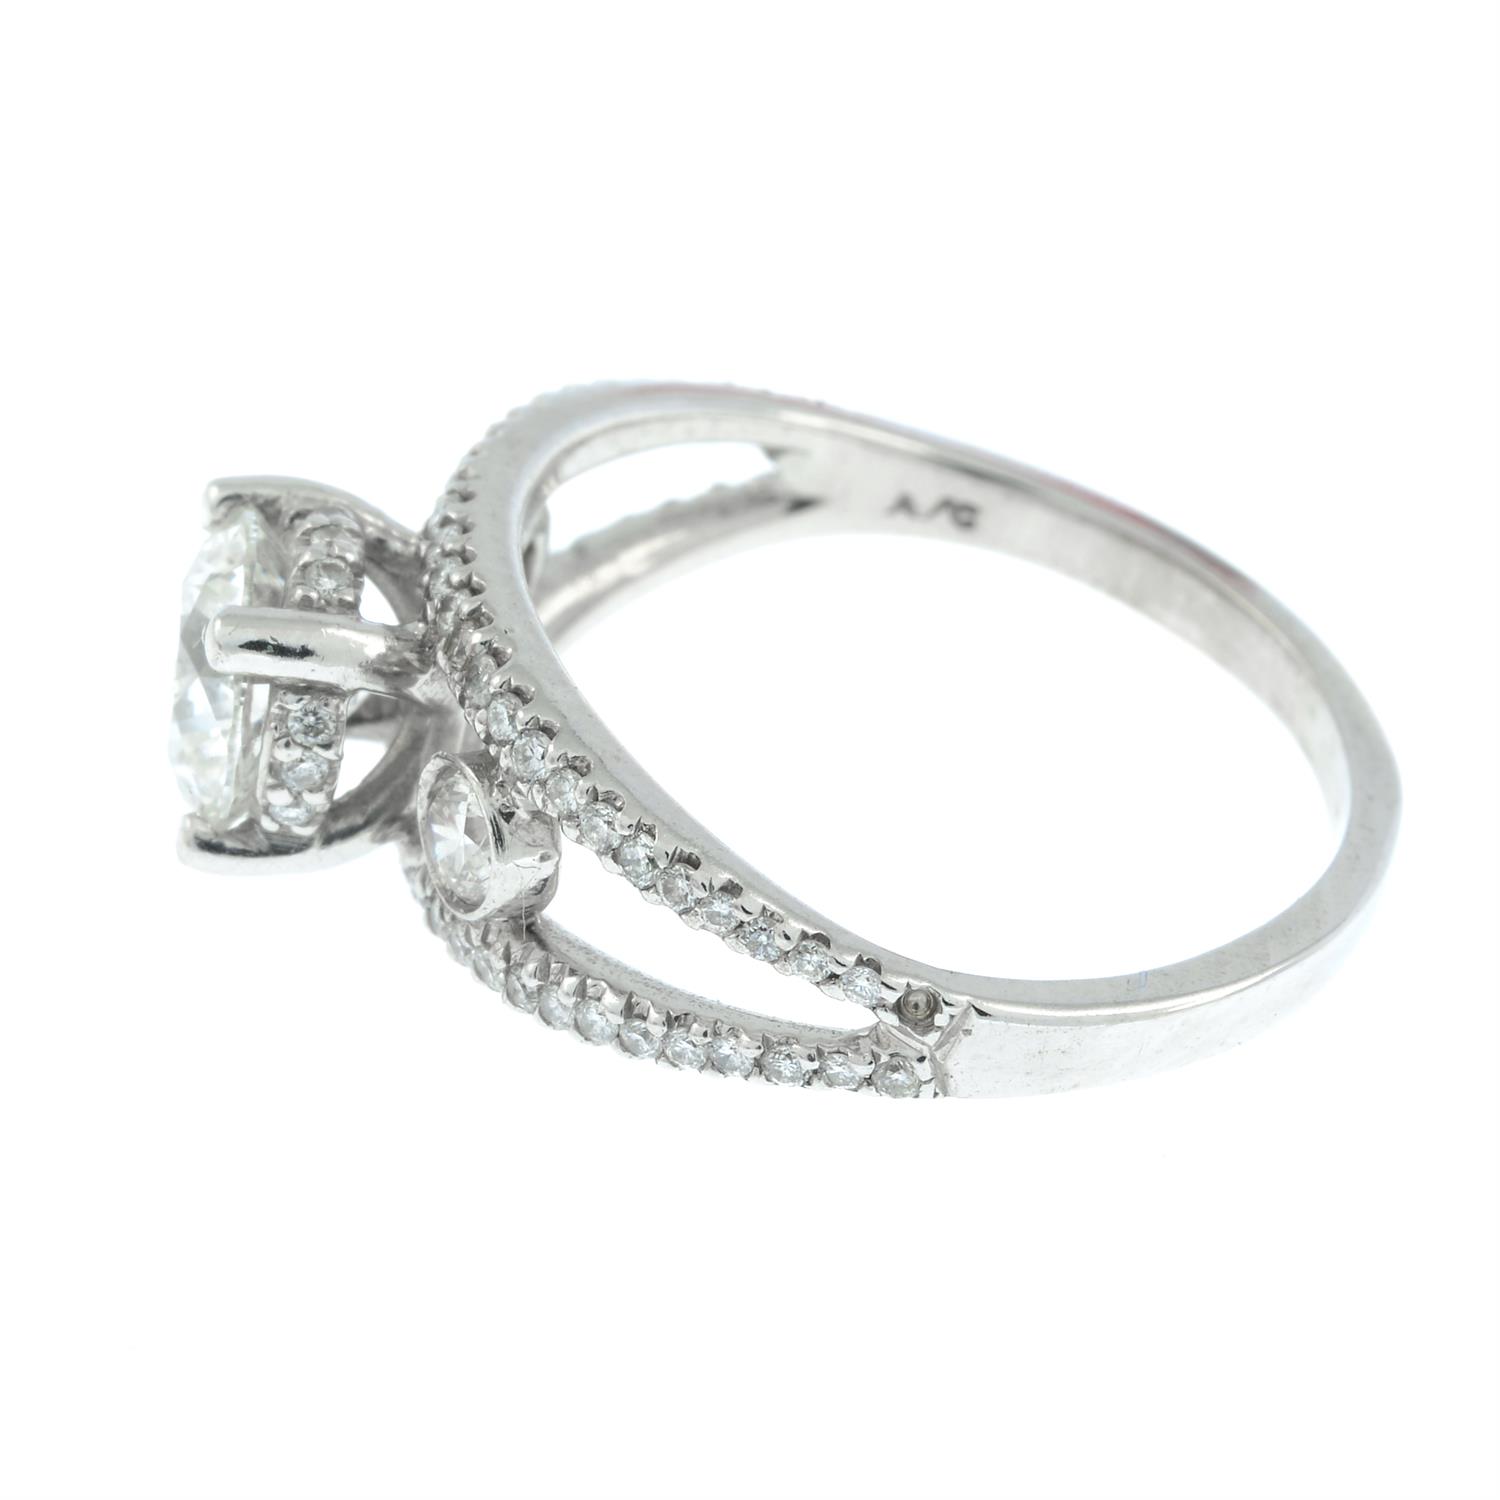 A brilliant-cut diamond ring. - Image 3 of 3